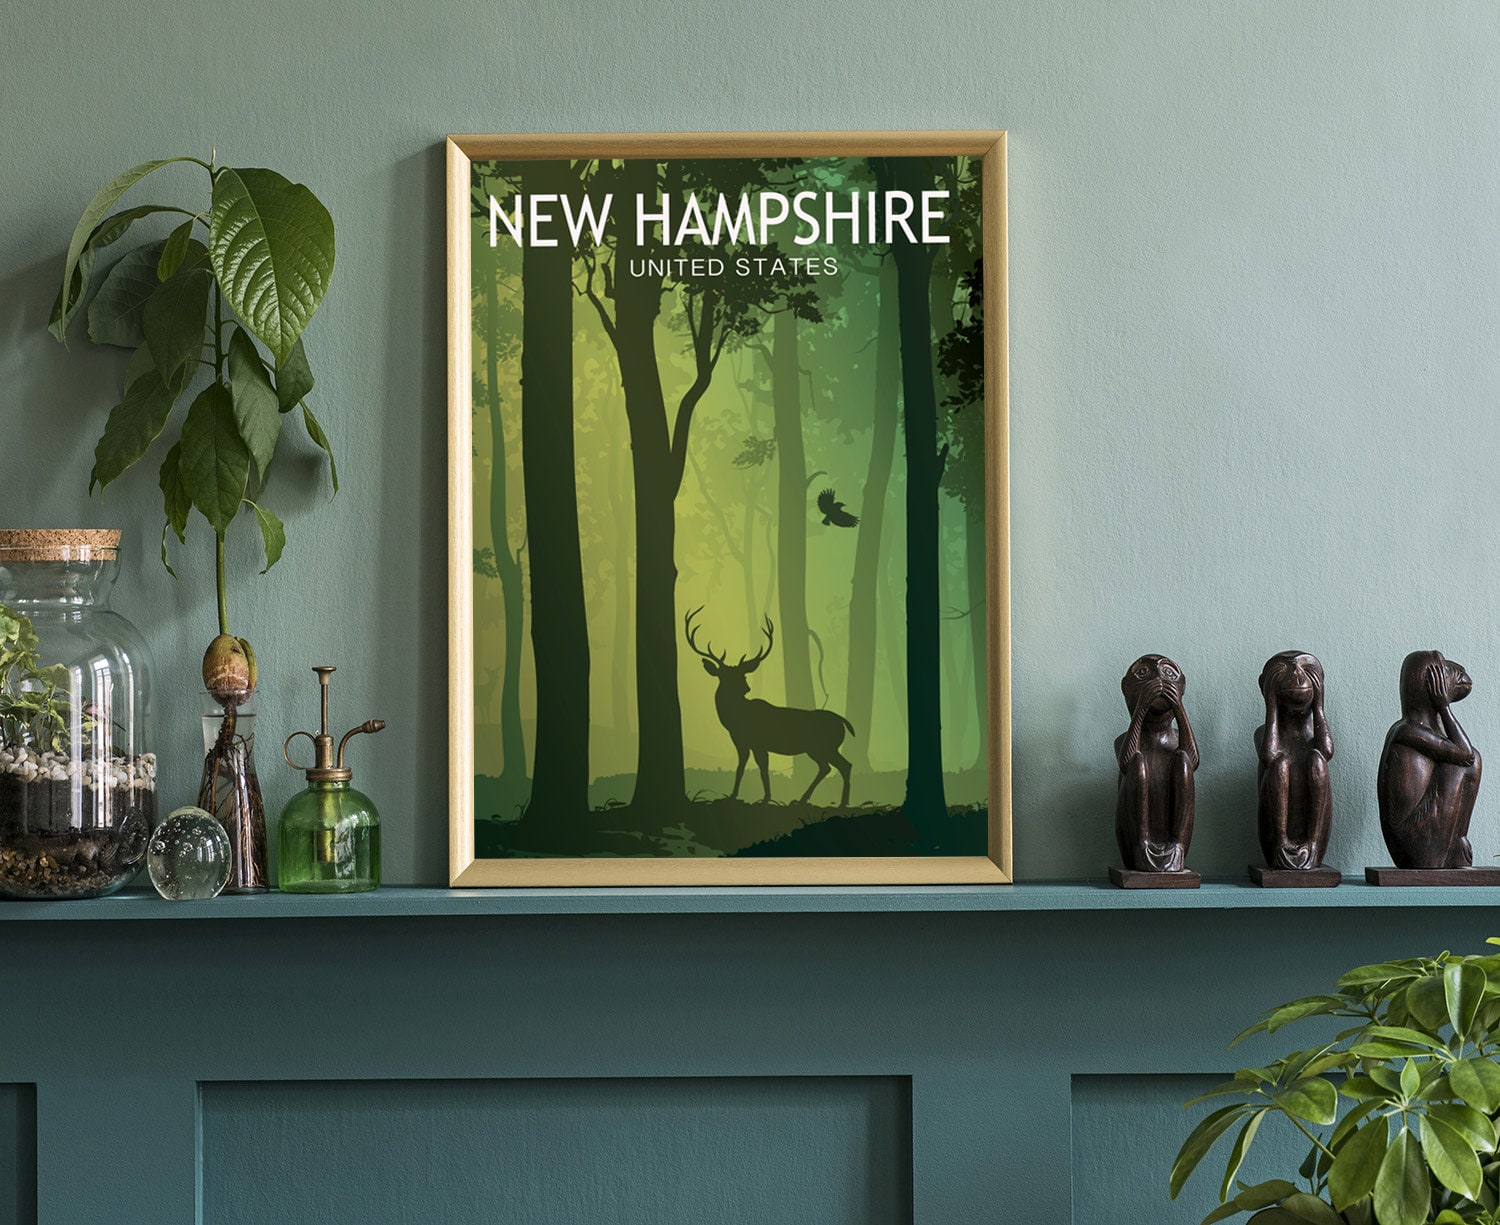 New Hampshire Vintage Rustic Poster Prints